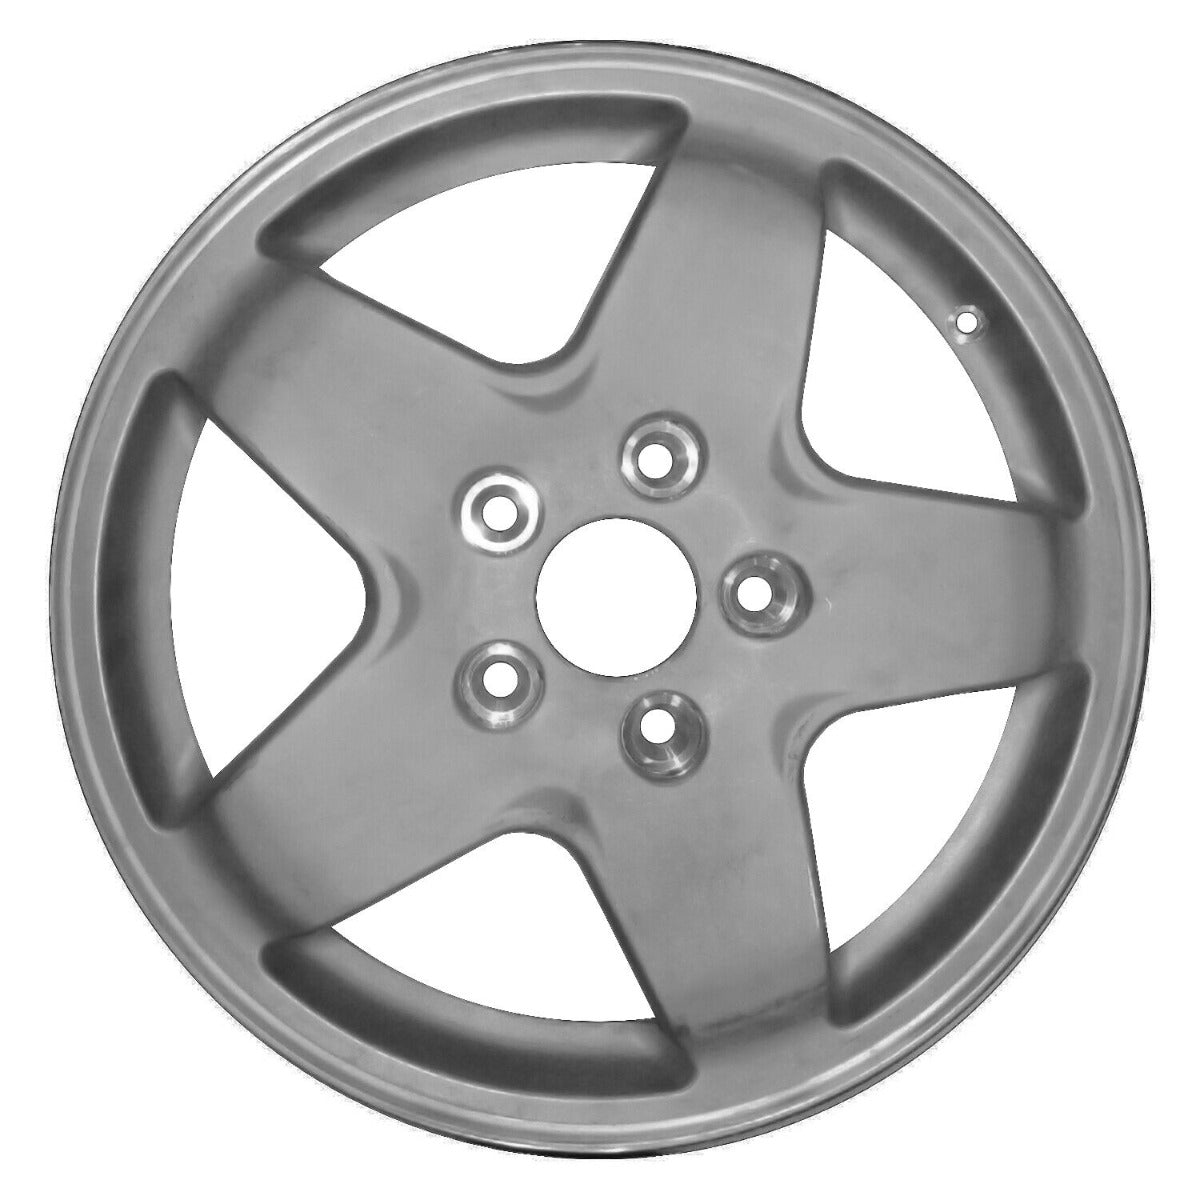 2014 Dodge Durango 18" OEM Wheel Rim Spare W96615S